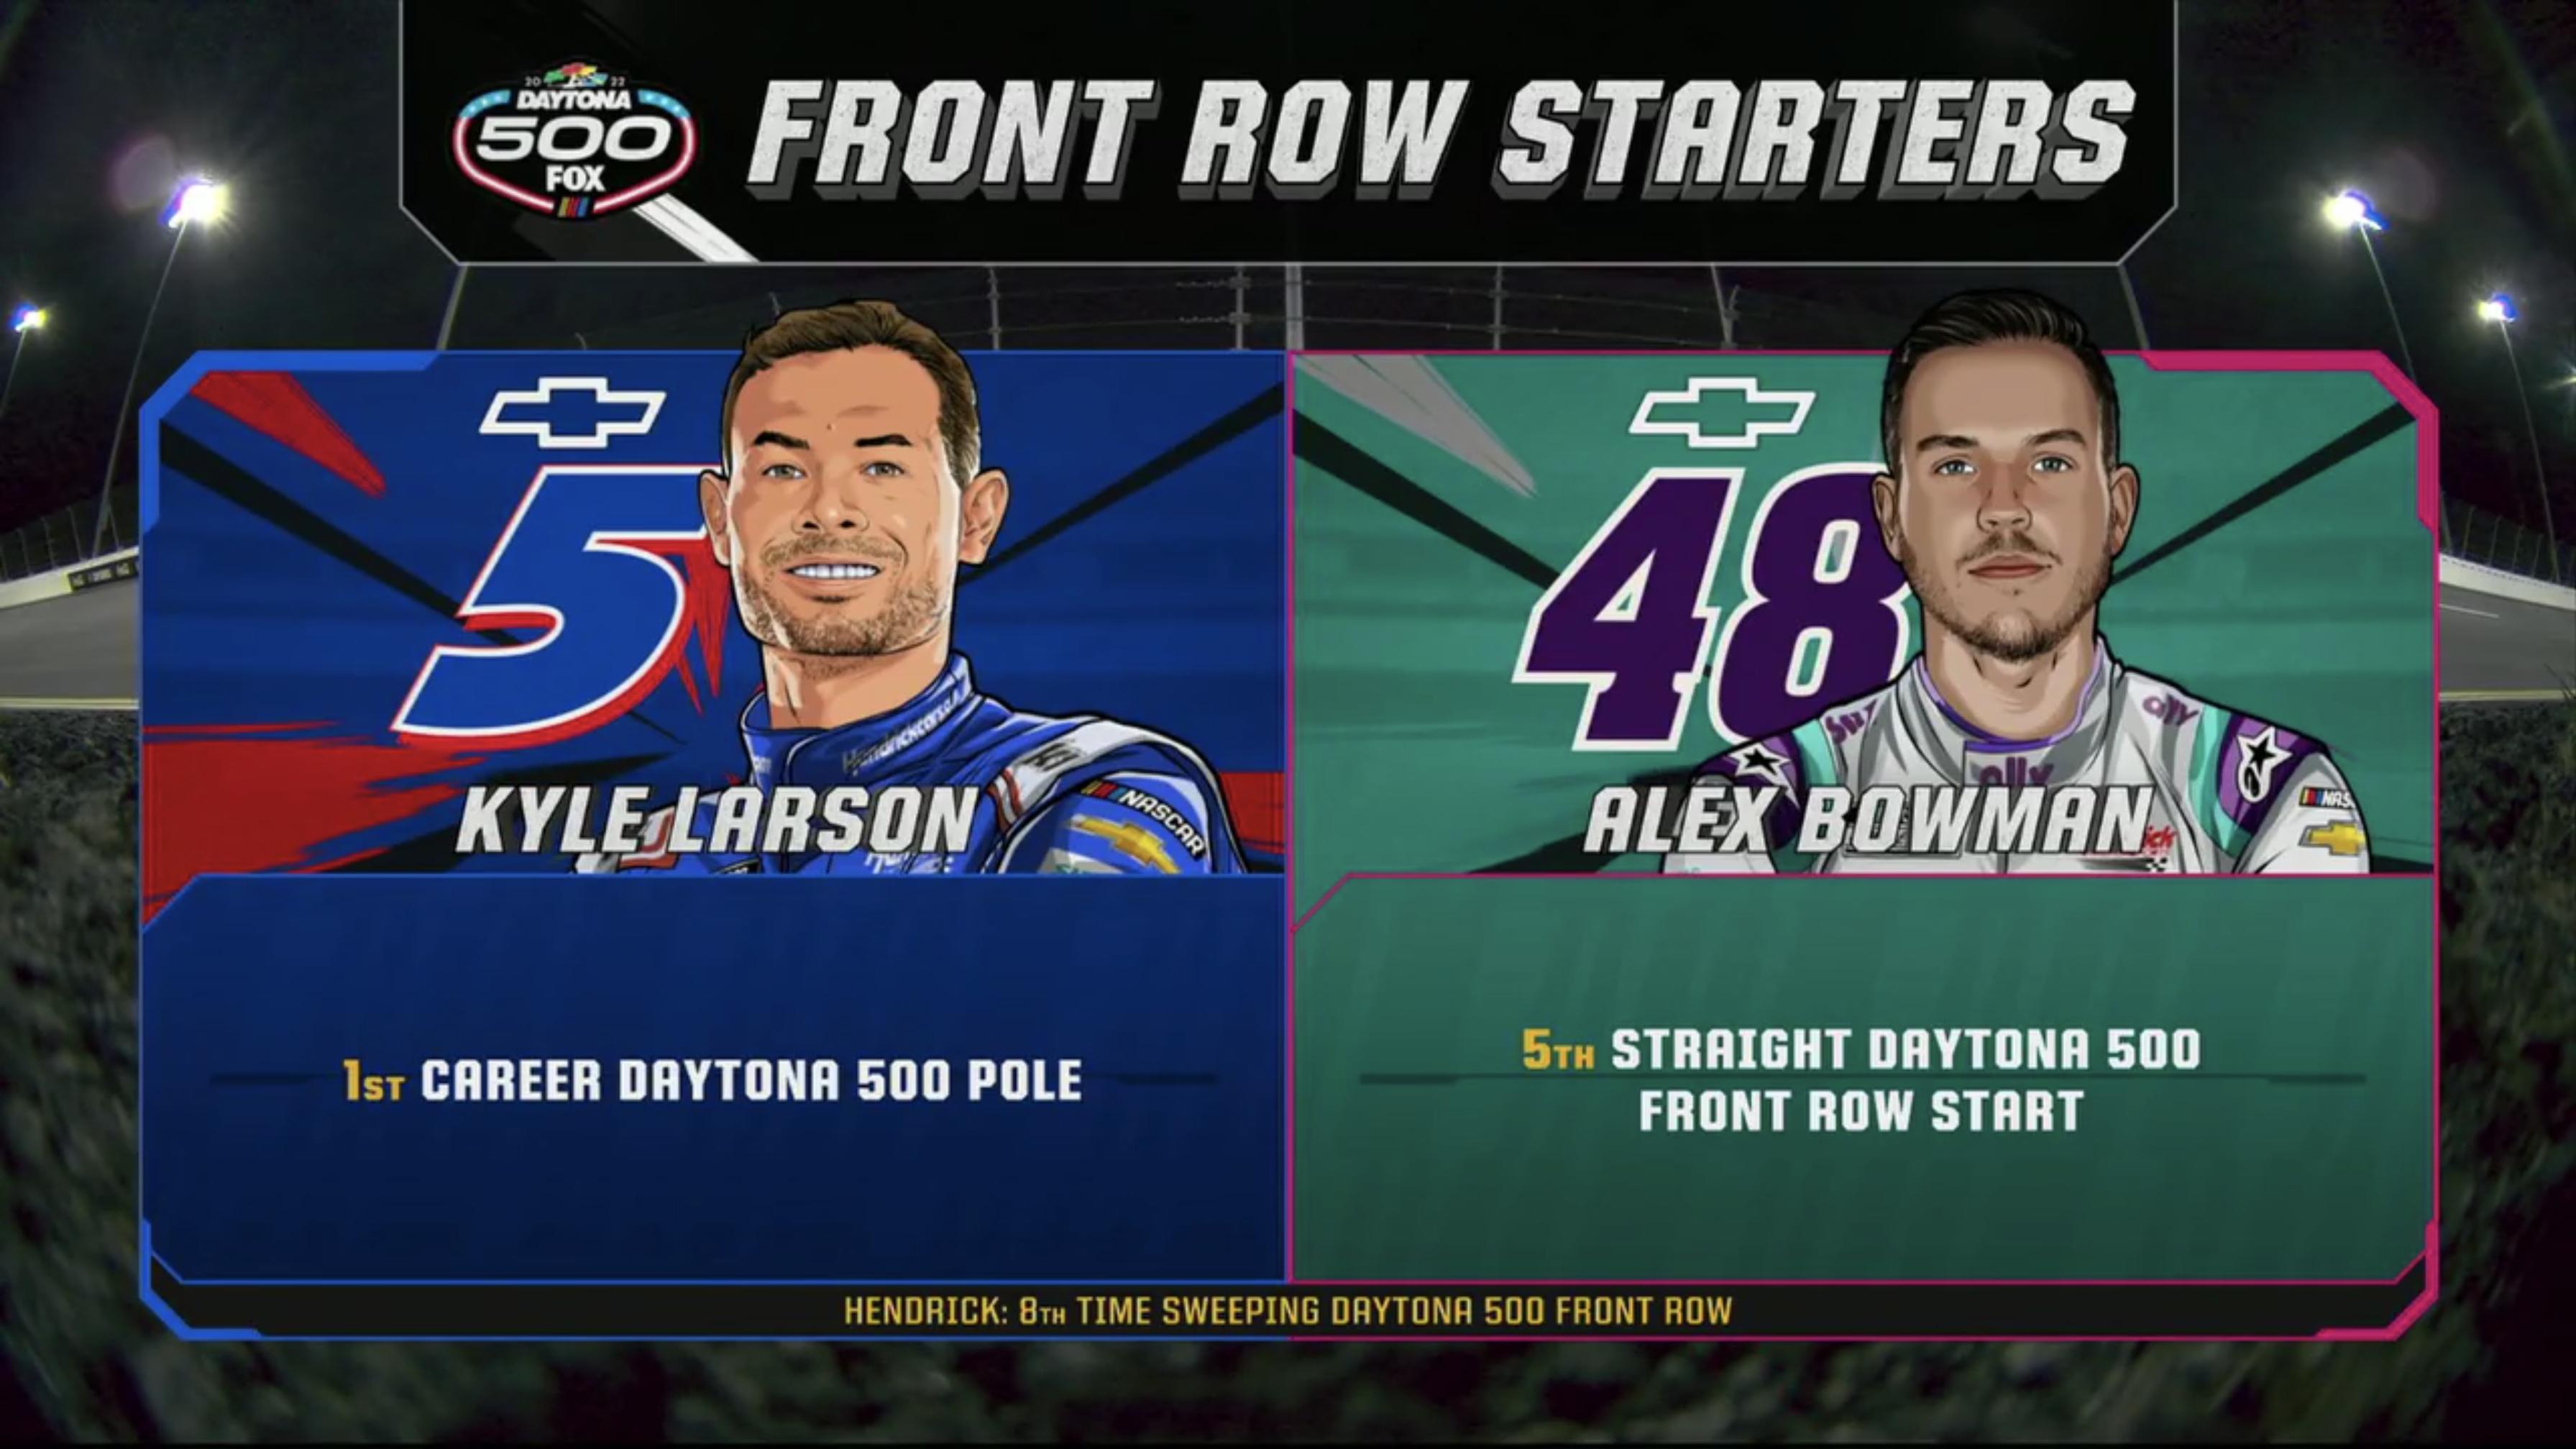 Live From Daytona 500 Fox Sports Makes 2022 NASCAR Season Debut With 1080p Broadcast, Massive Onsite Presence